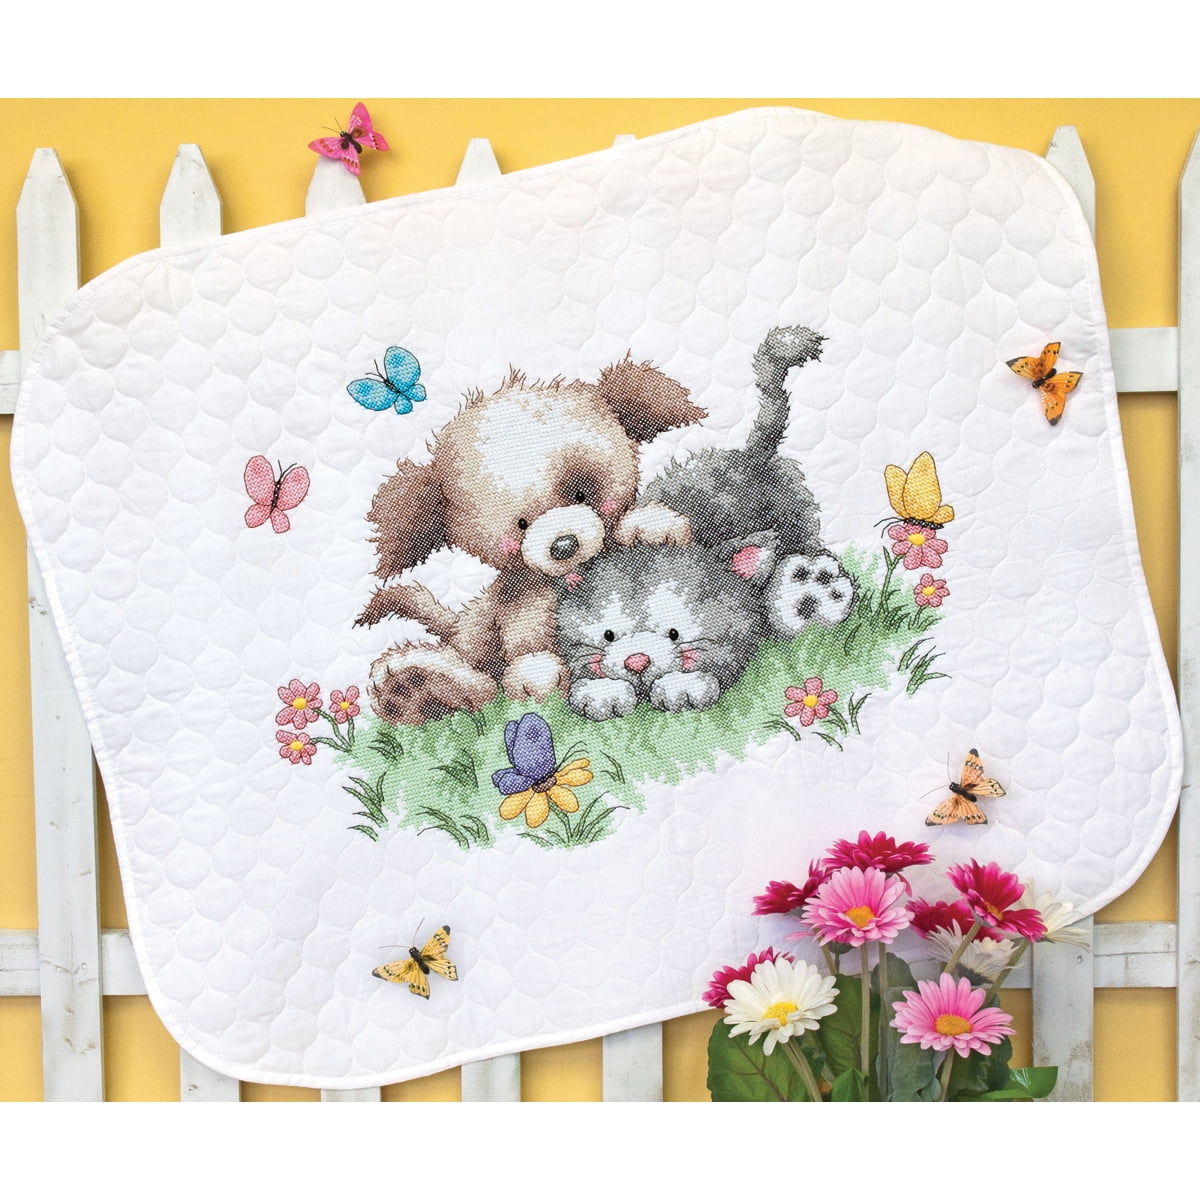 NEW Janlynn Cross Stitch Baby Quilt Kit #08-156 BABY'S FRIENDS 34 x 43